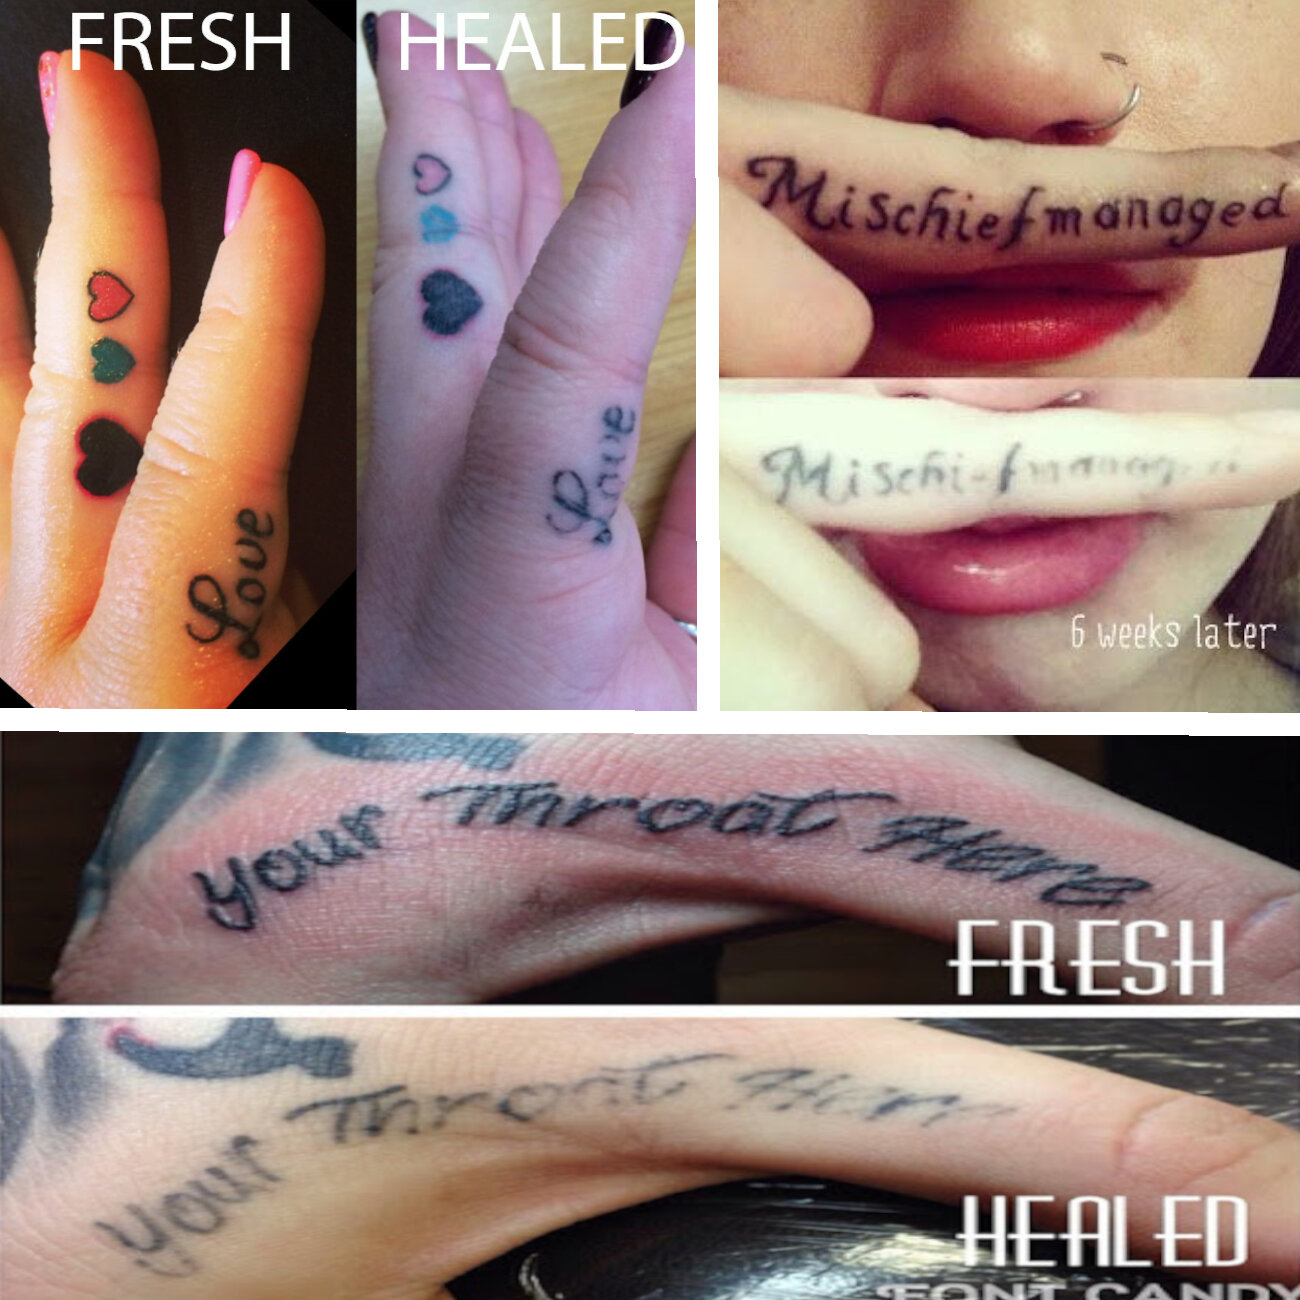 Why hand tattoos are a bad idea